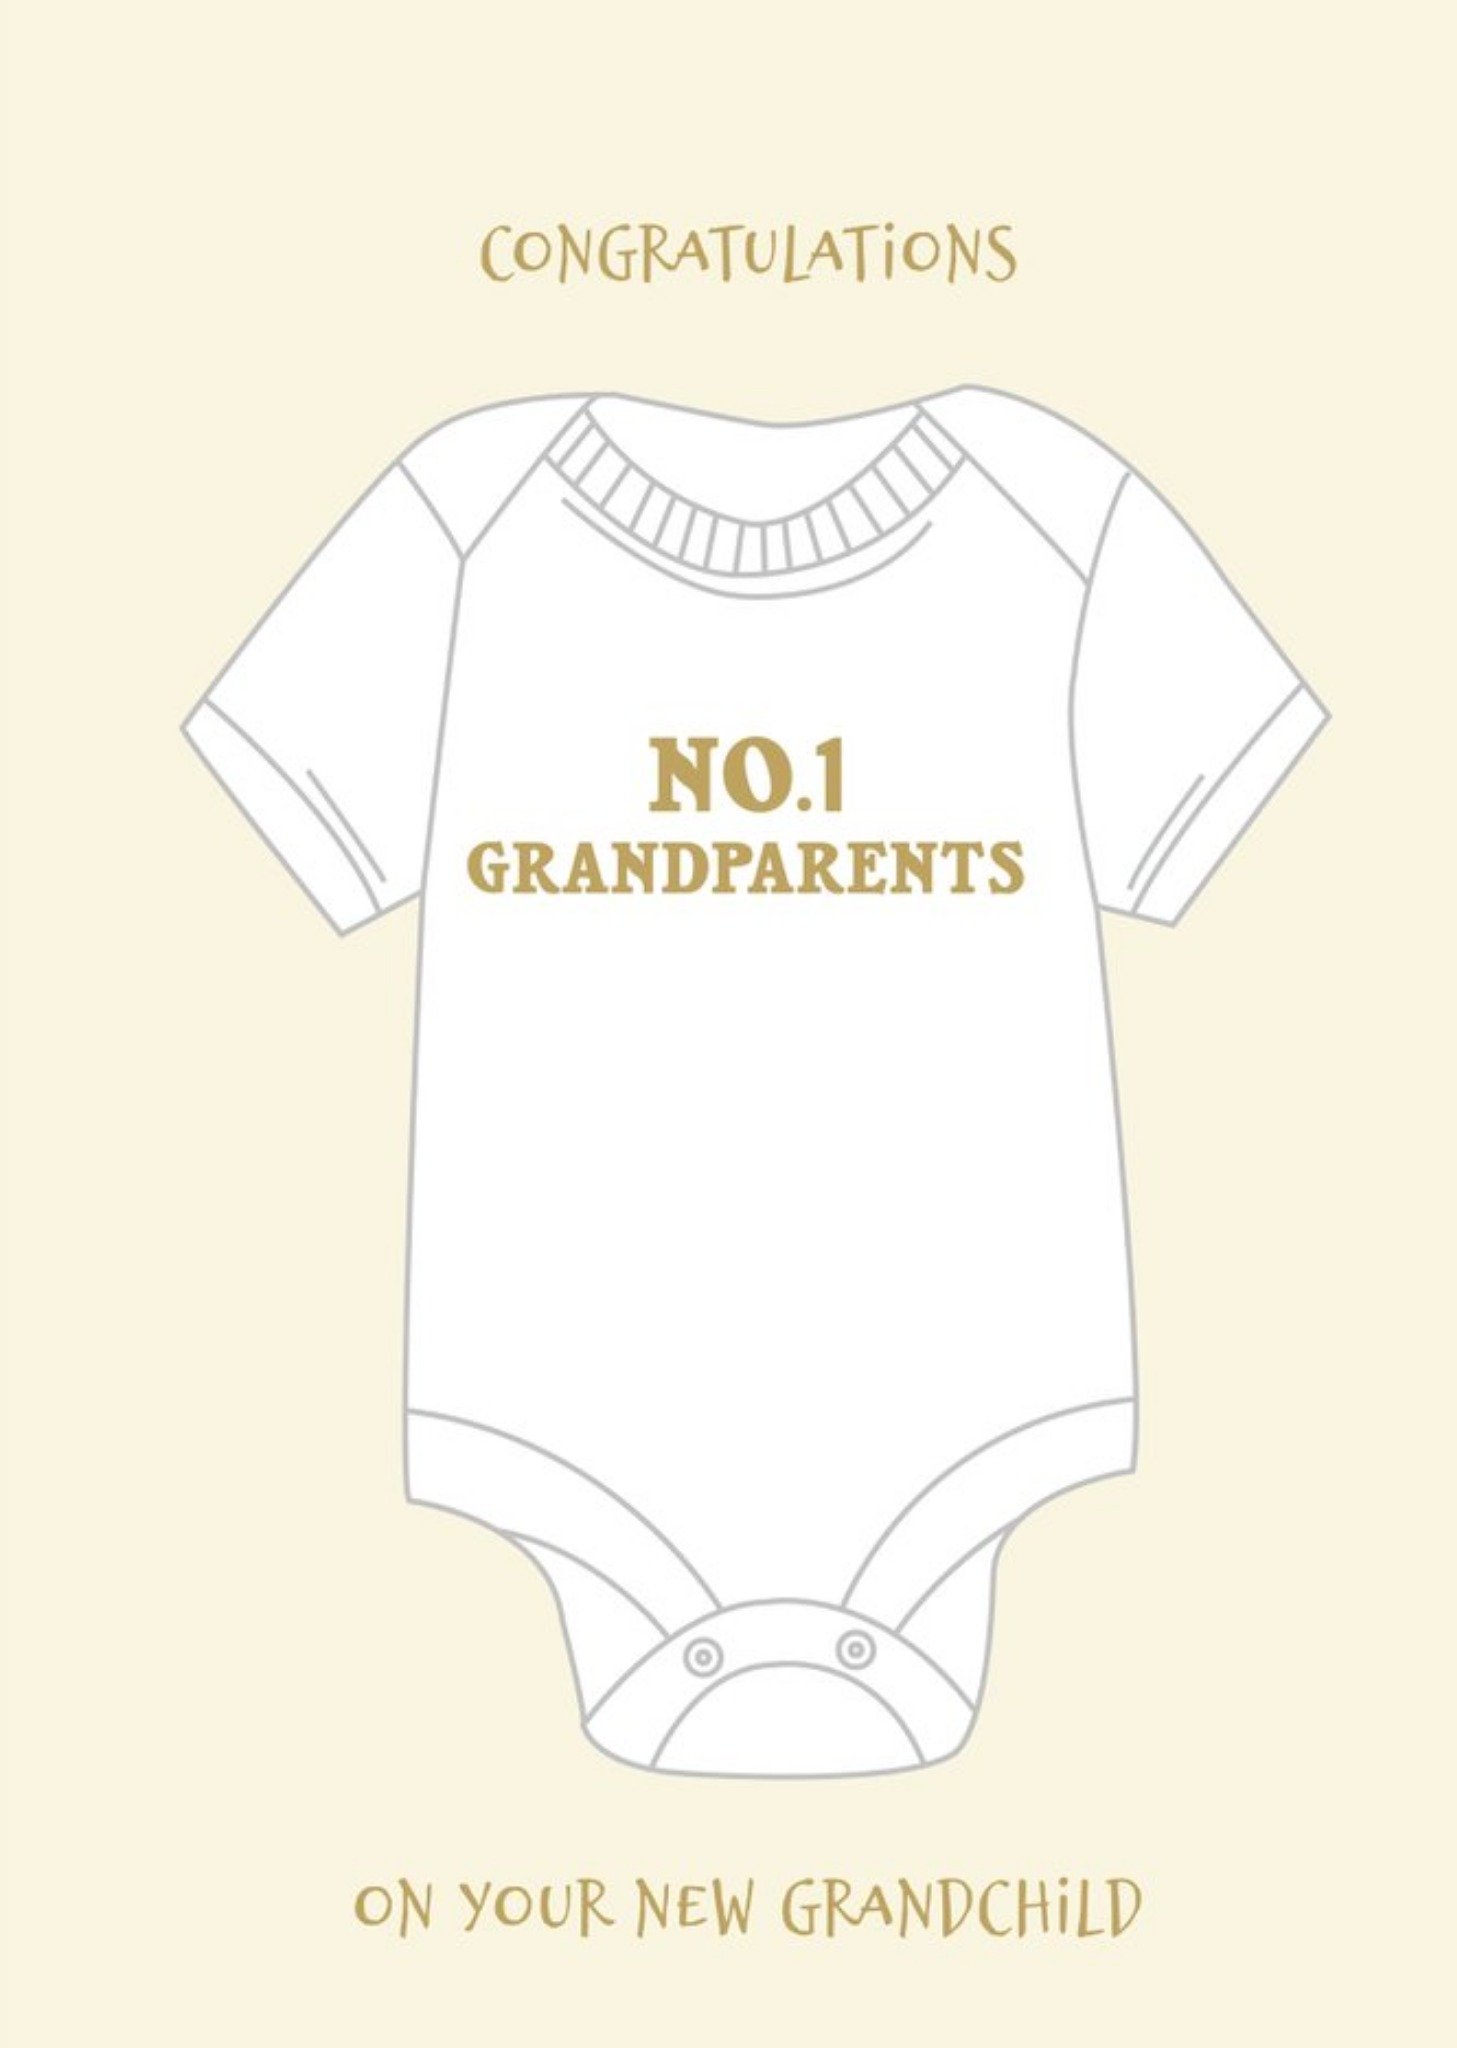 Moonpig Pearl And Ivy Illustrated Baby Grow No.1 Grandparents Congratulations Card Ecard